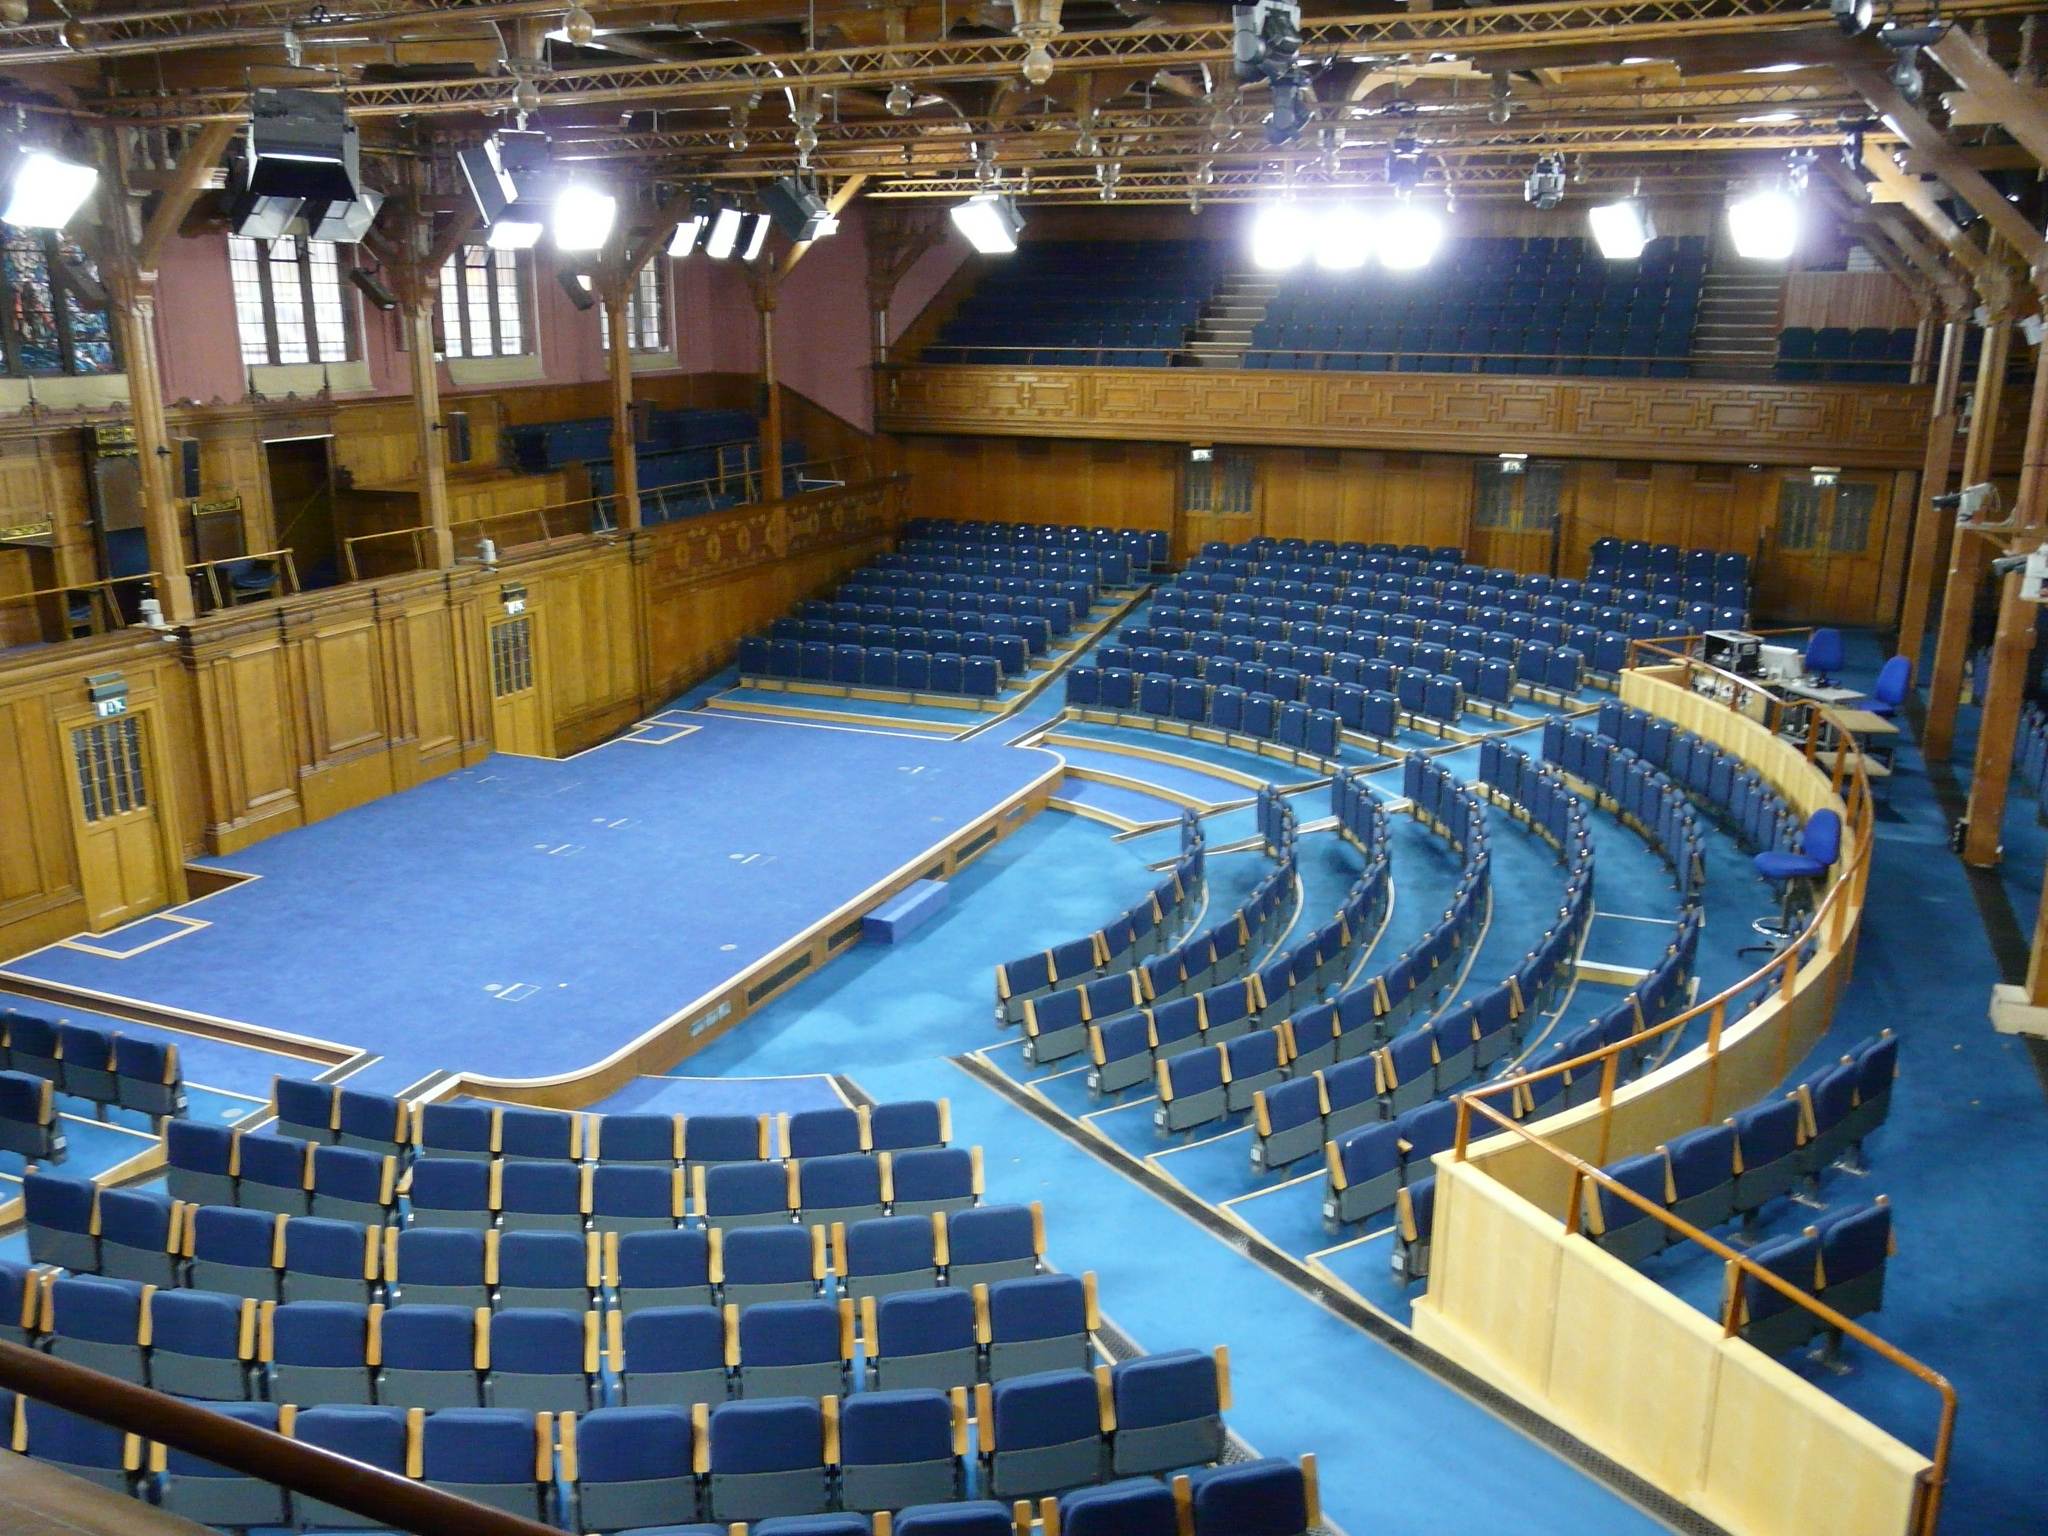 assembly1 - Assembly Hall - Locations - Film Edinburgh